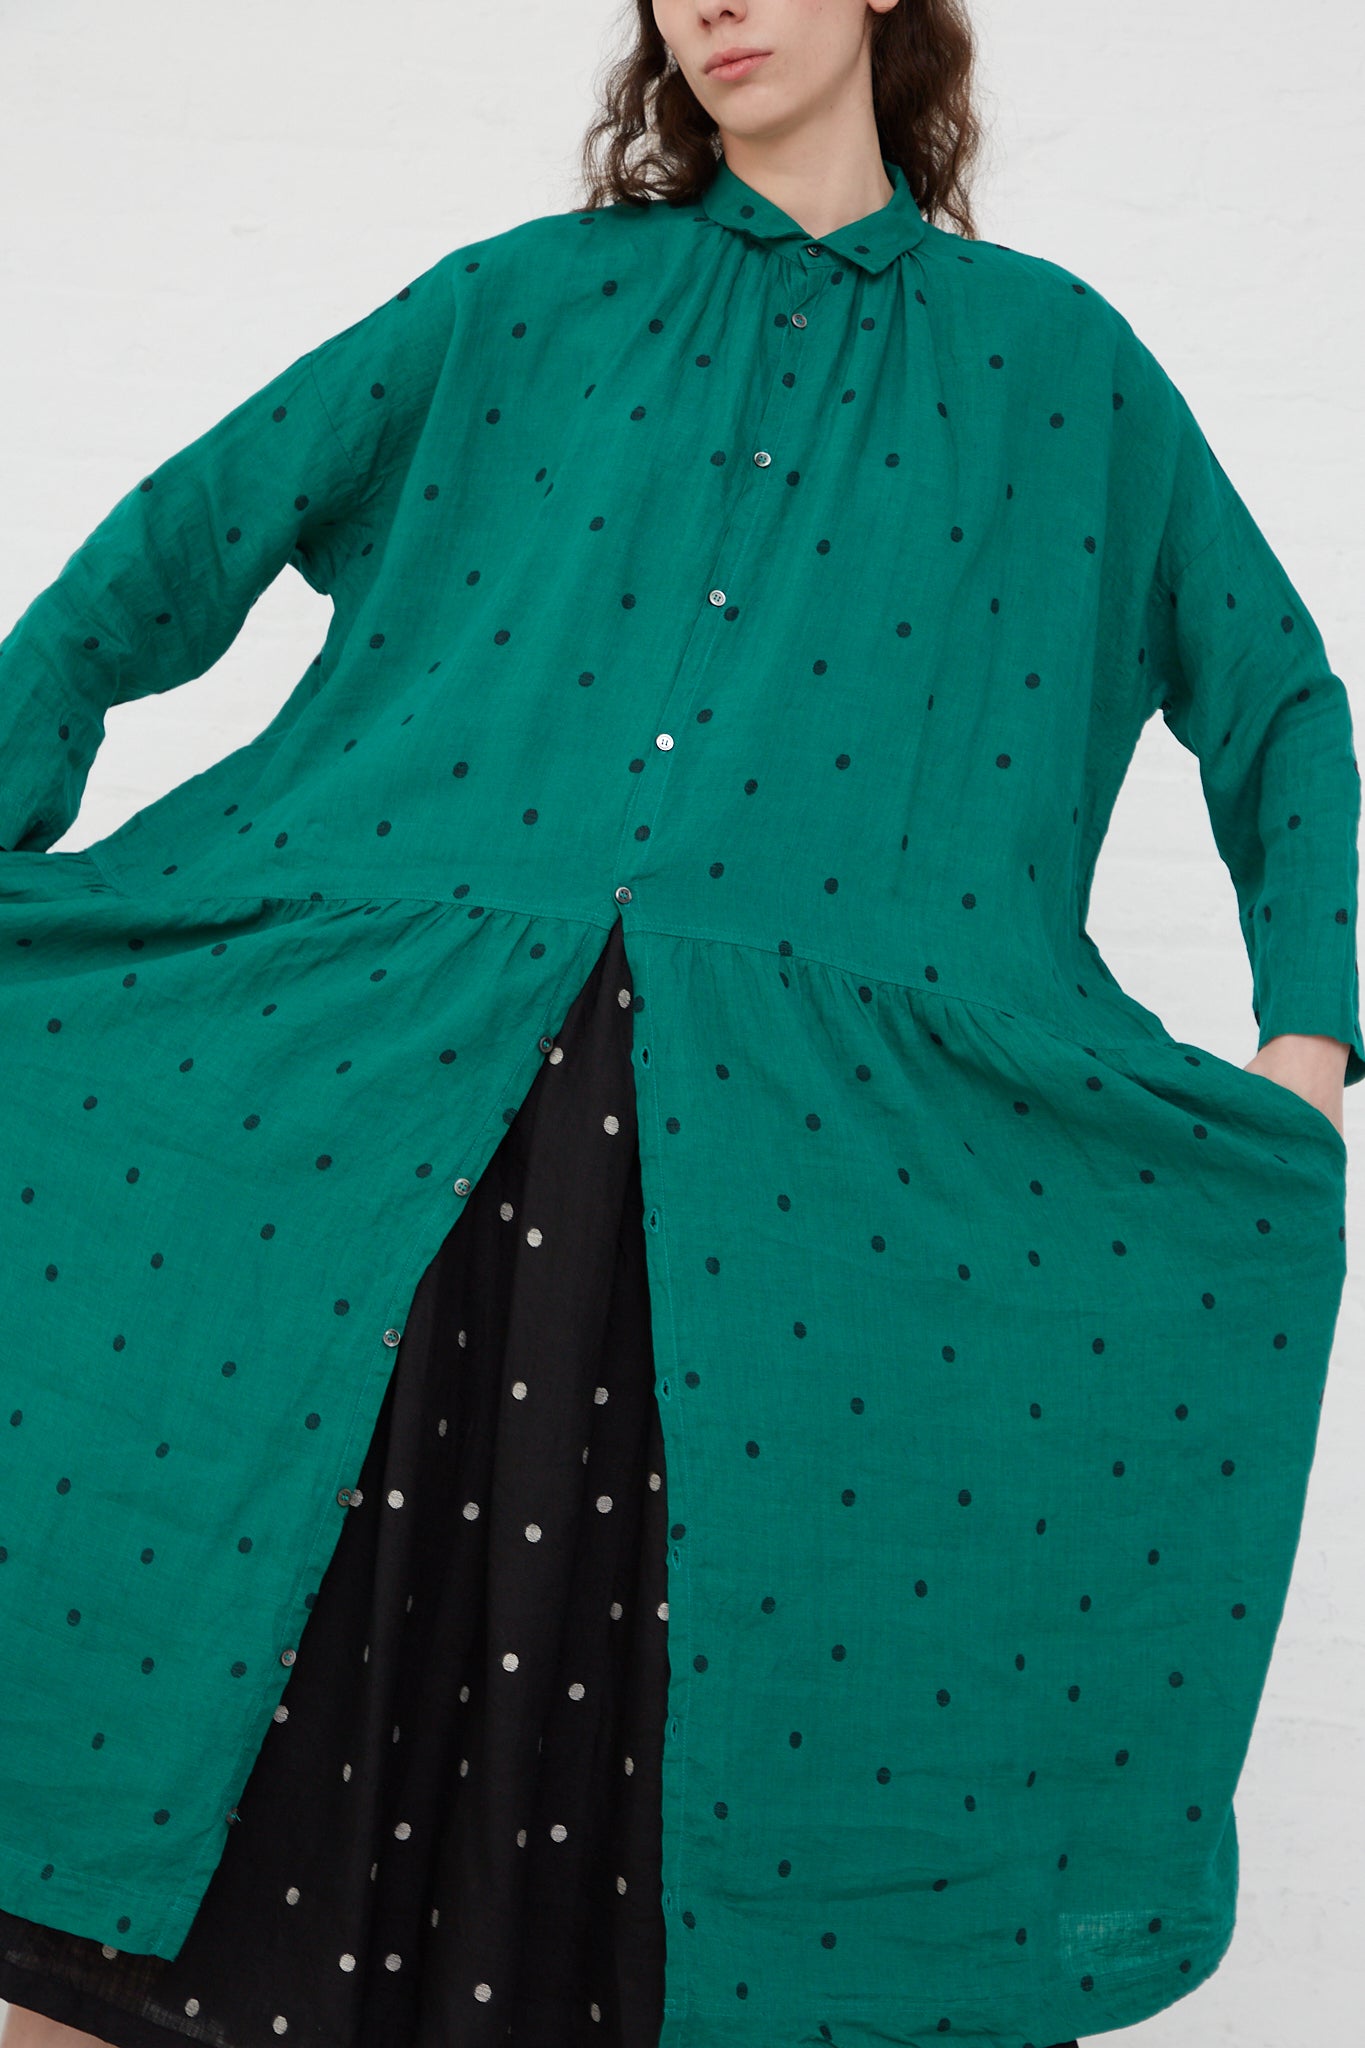 The model is wearing an Ichi Antiquités Linen Dot Dress in Green and Black.